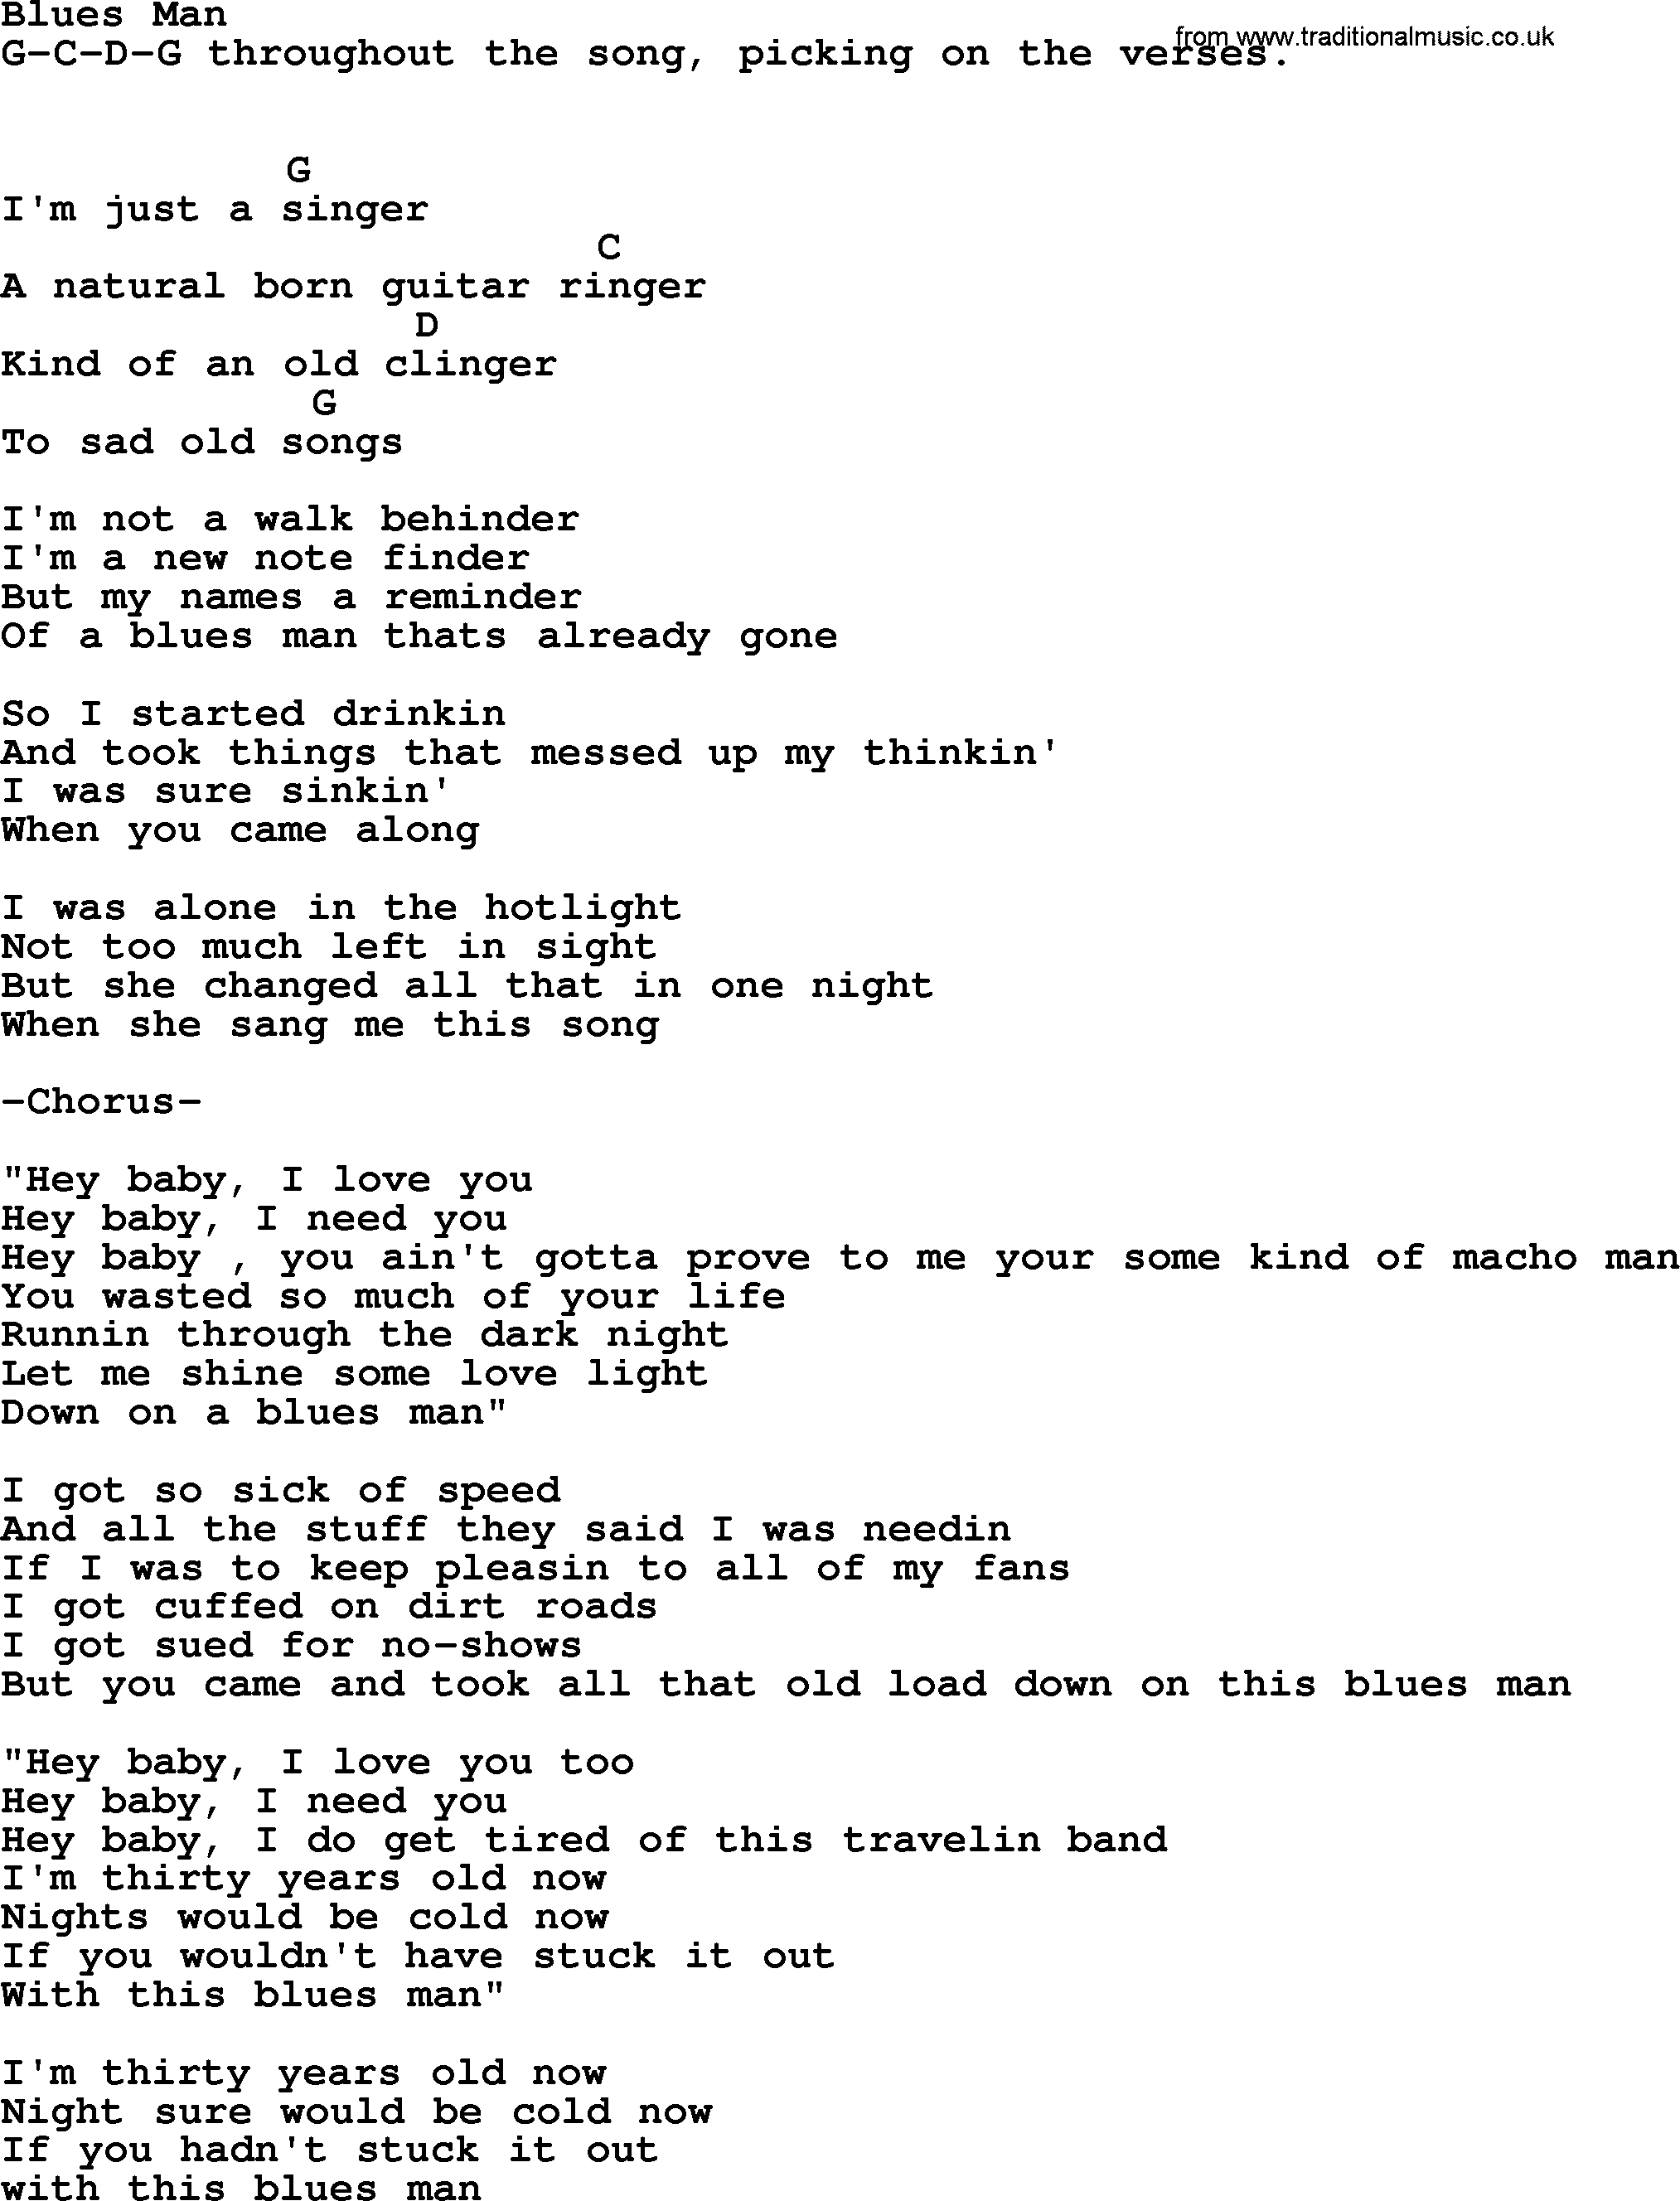 Hank Williams song Blues Man, lyrics and chords